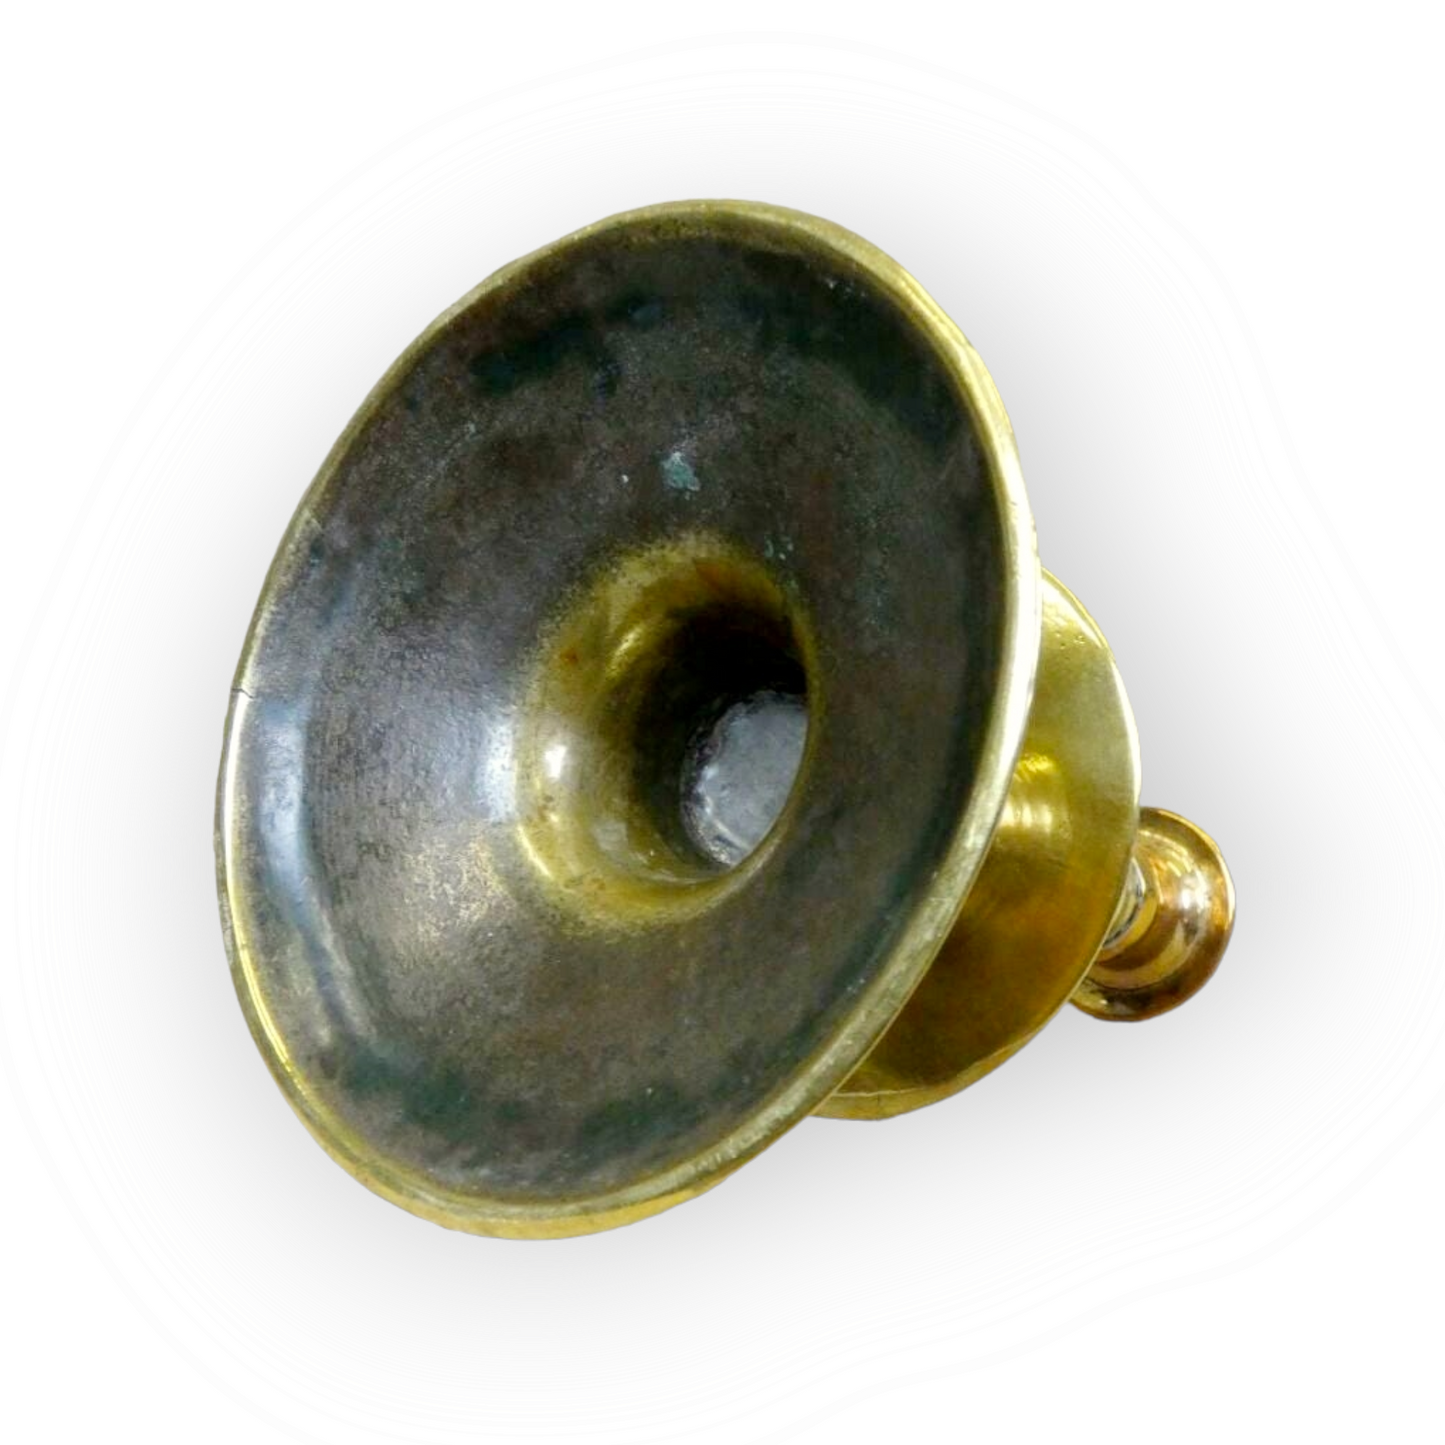 Rare 17th Century English Antique Brass Trumpet-Base Candlestick, Circa 1650-1680